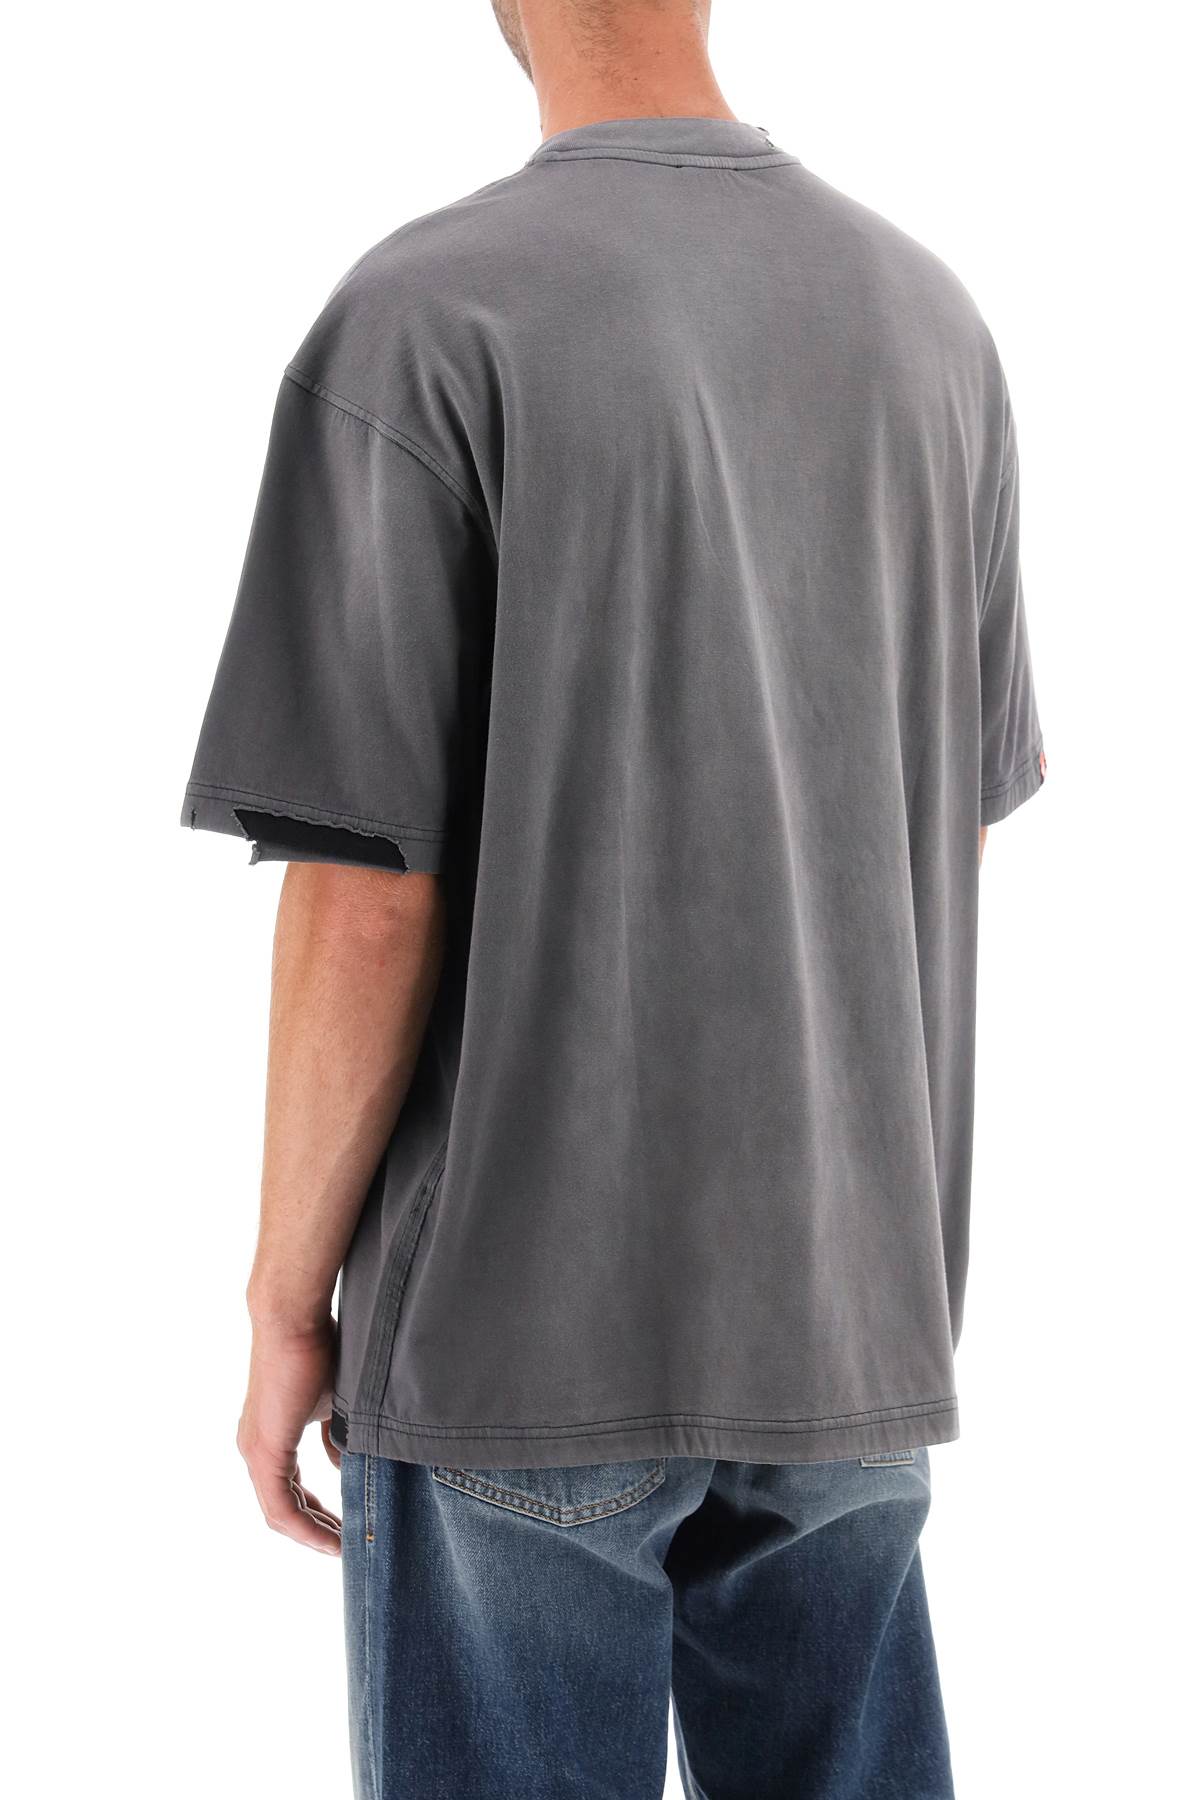 Men's 't-washrat' T-shirt With Flocked Logo by Diesel